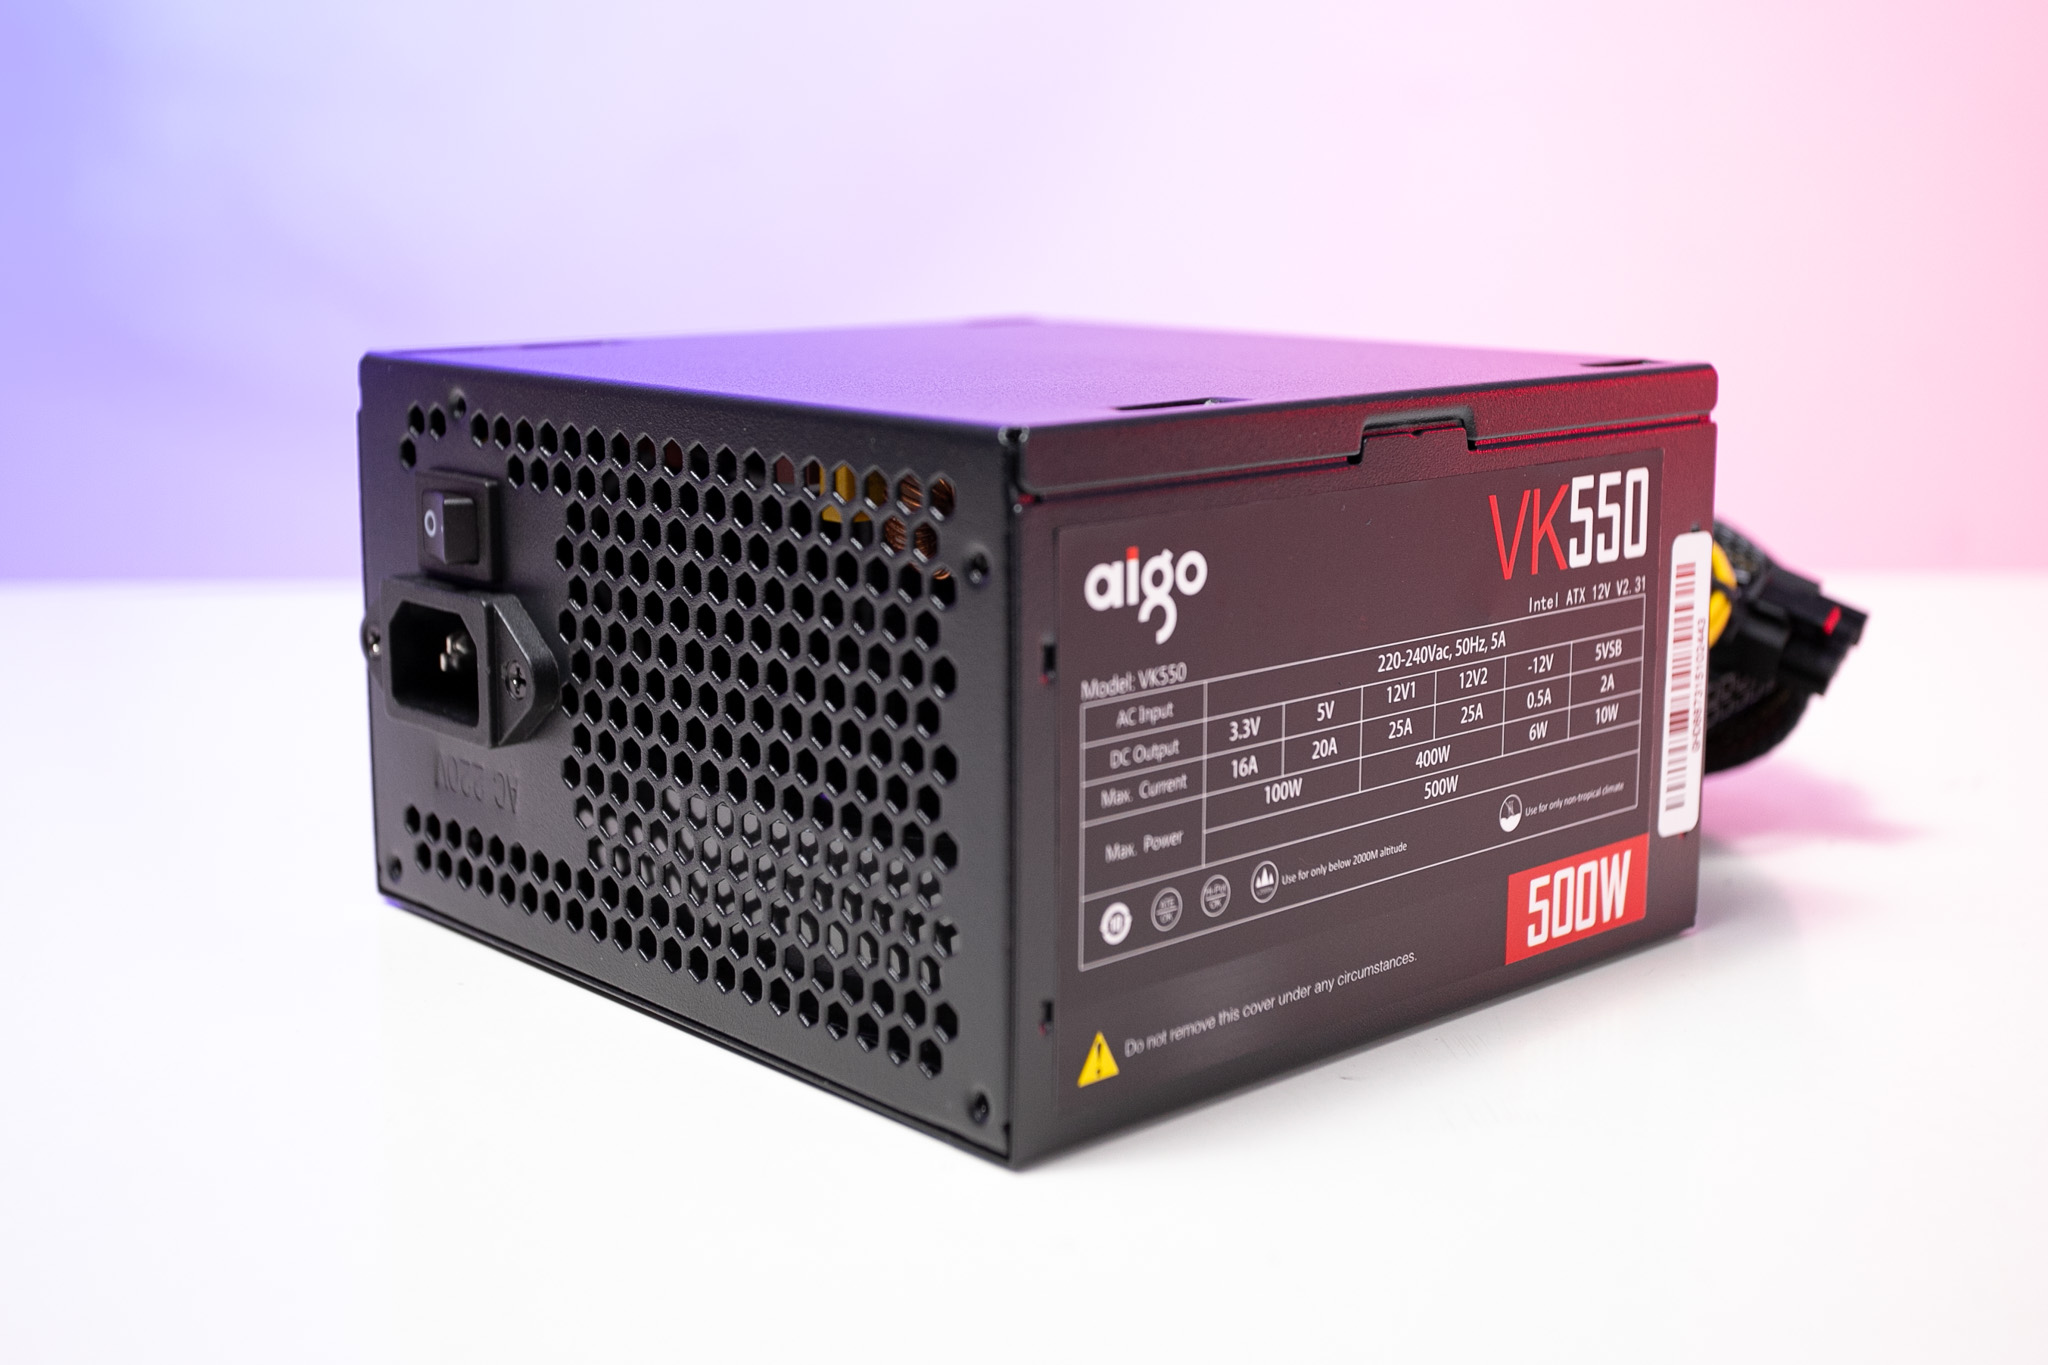 Nguồn máy tính AIGO VK550 - 550W (Màu Đen)